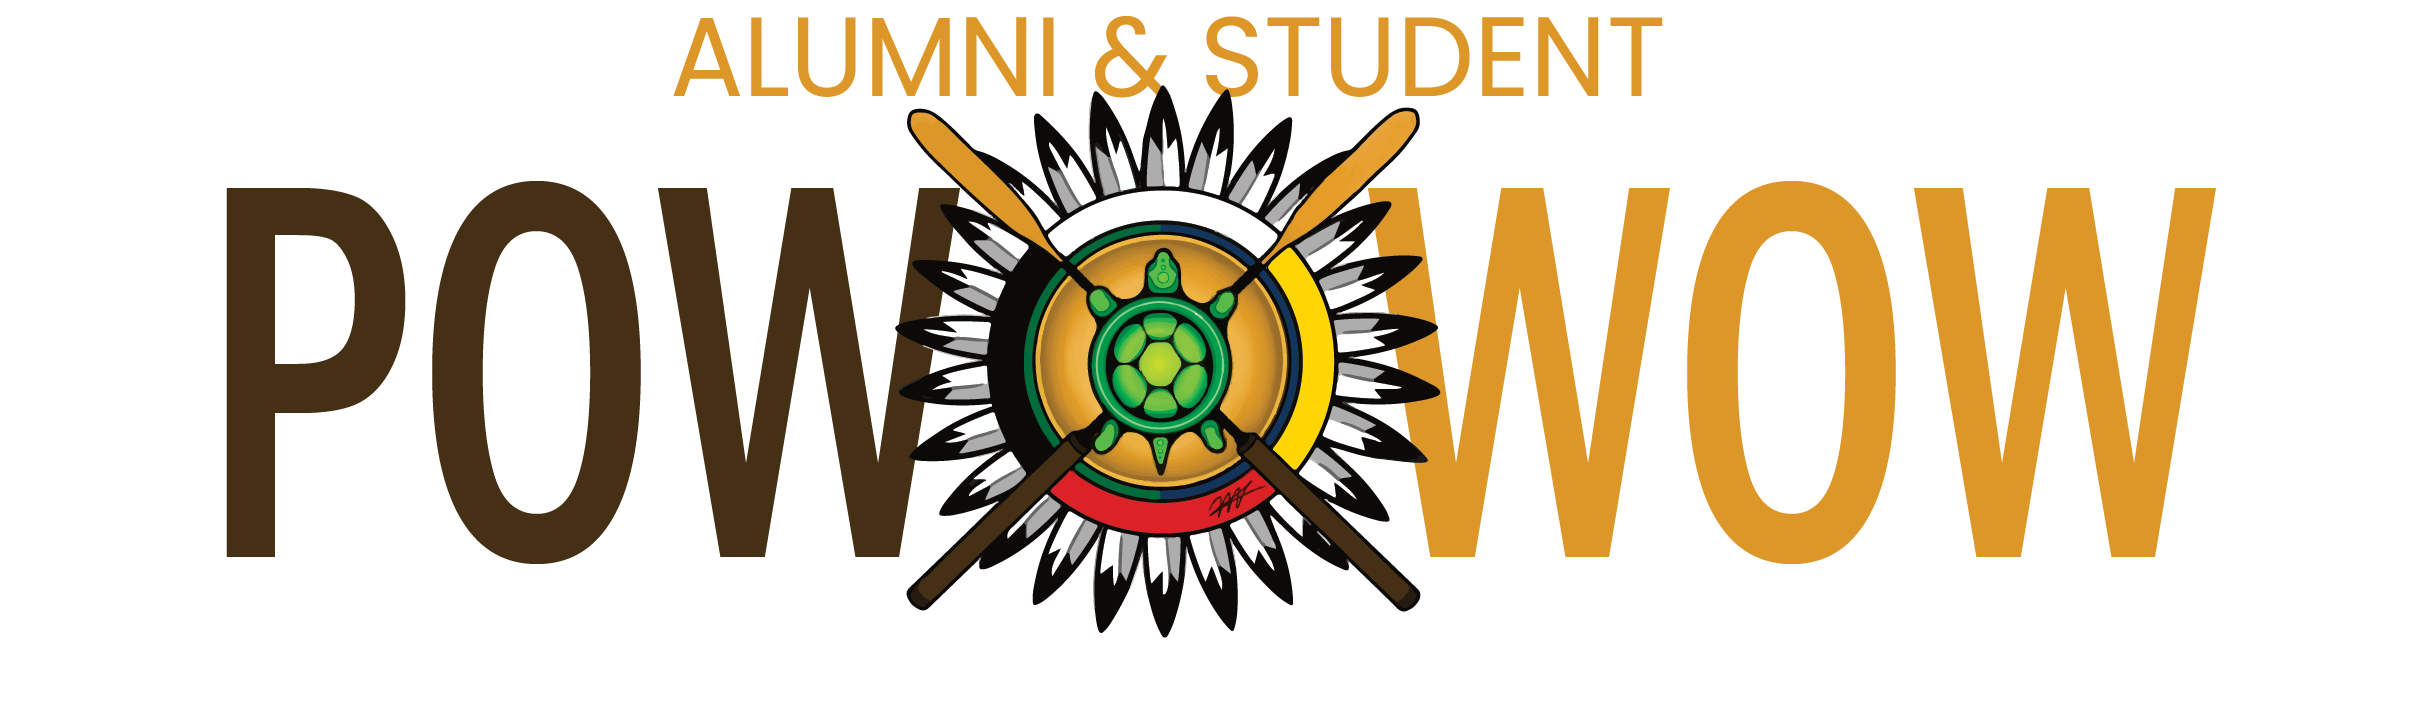 Alumni & Student Pow Wow